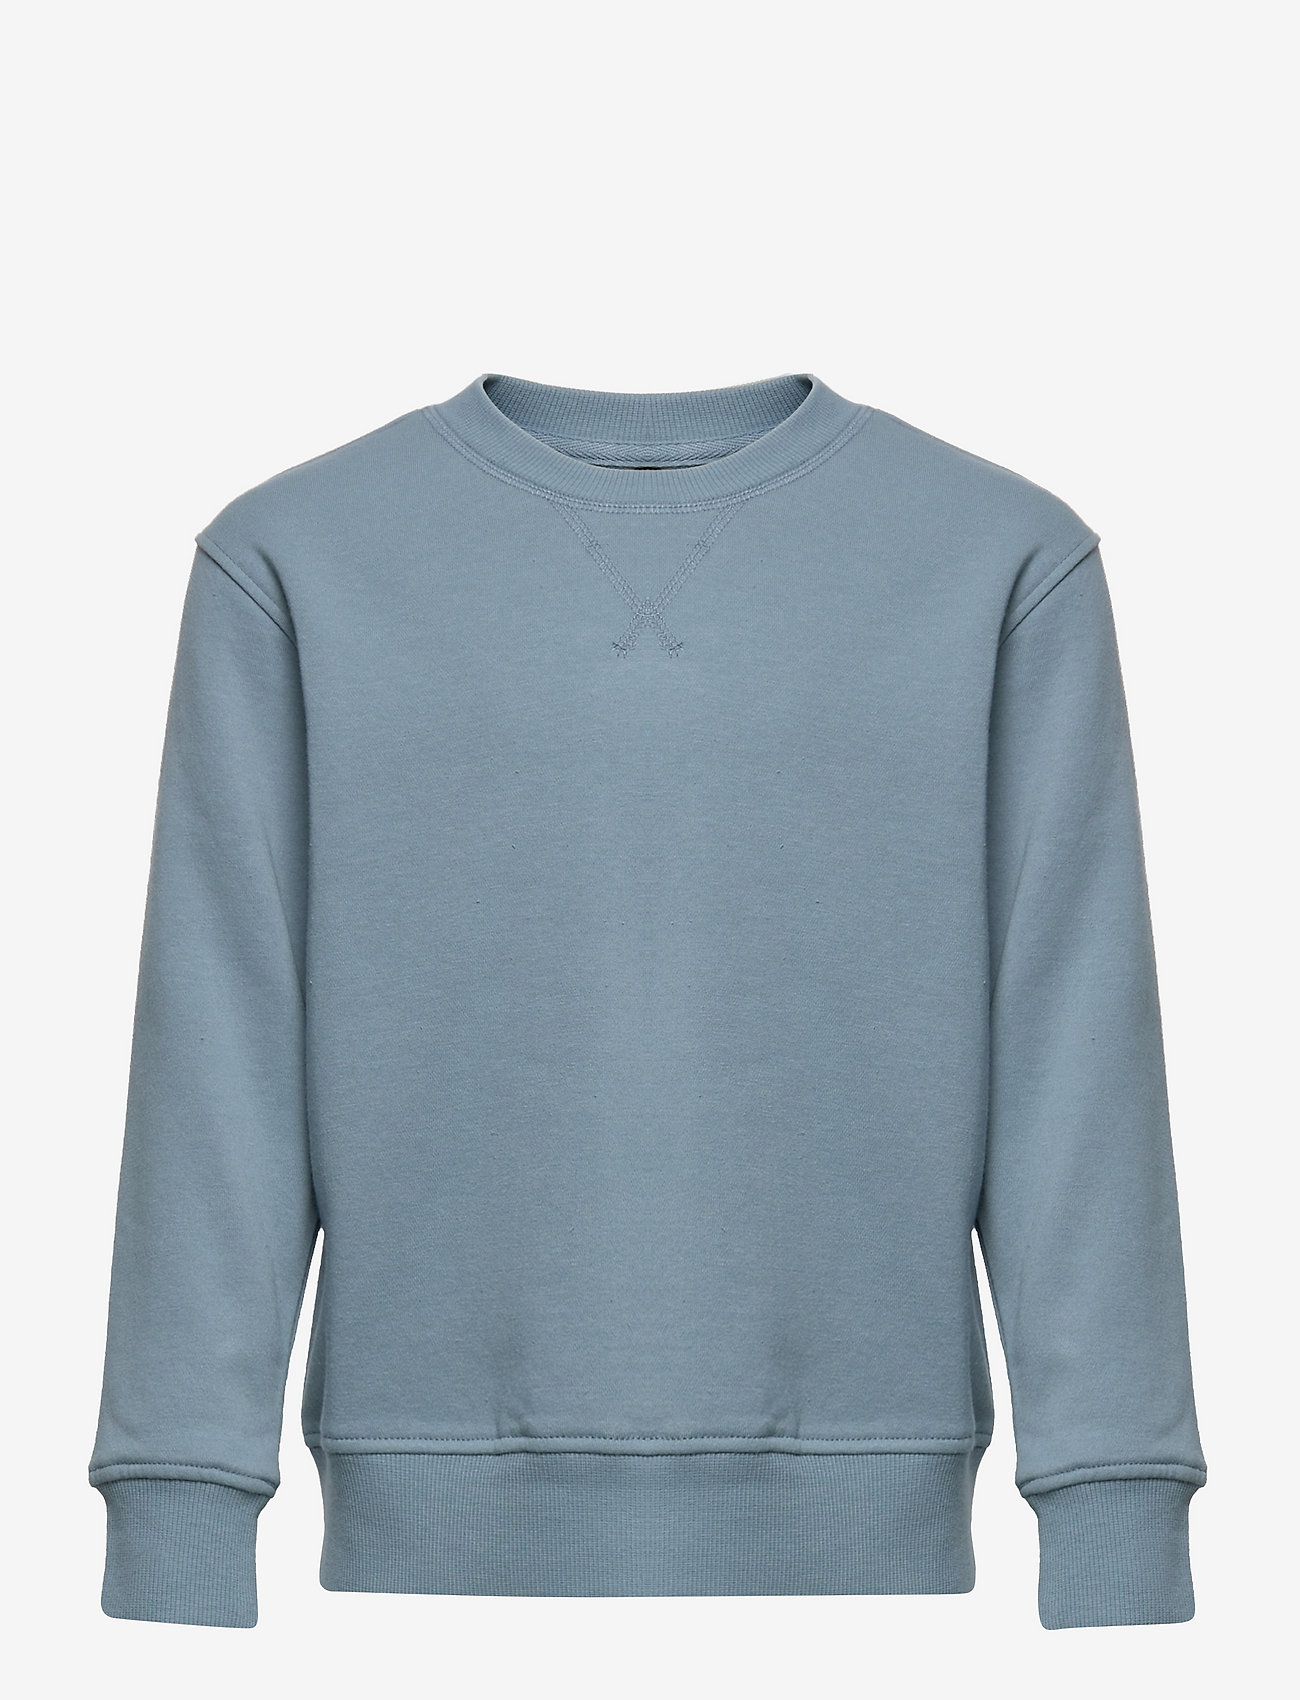 Claudio - Claudio Boys sweatshirt - sweatshirts & hoodies - blå - 0